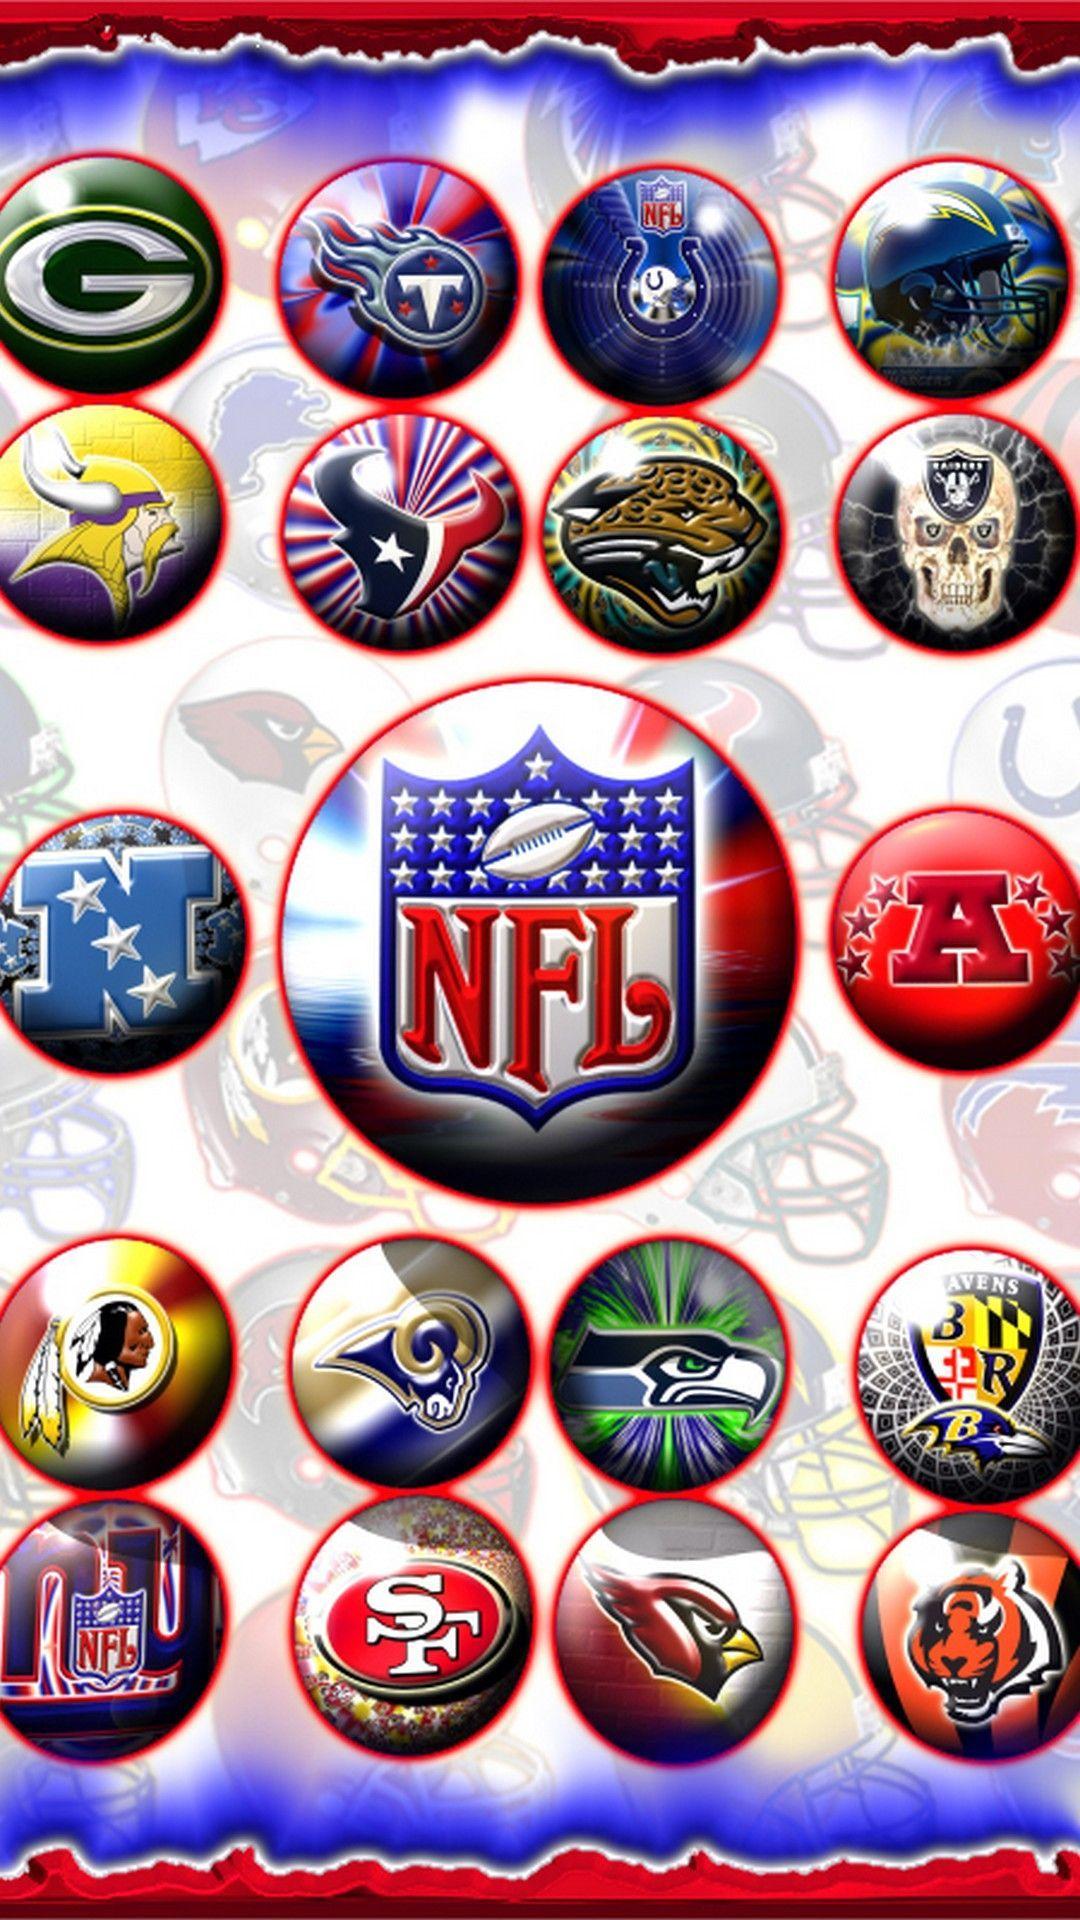 NFL iPhone Wallpaper. Football wallpaper and Nfl football